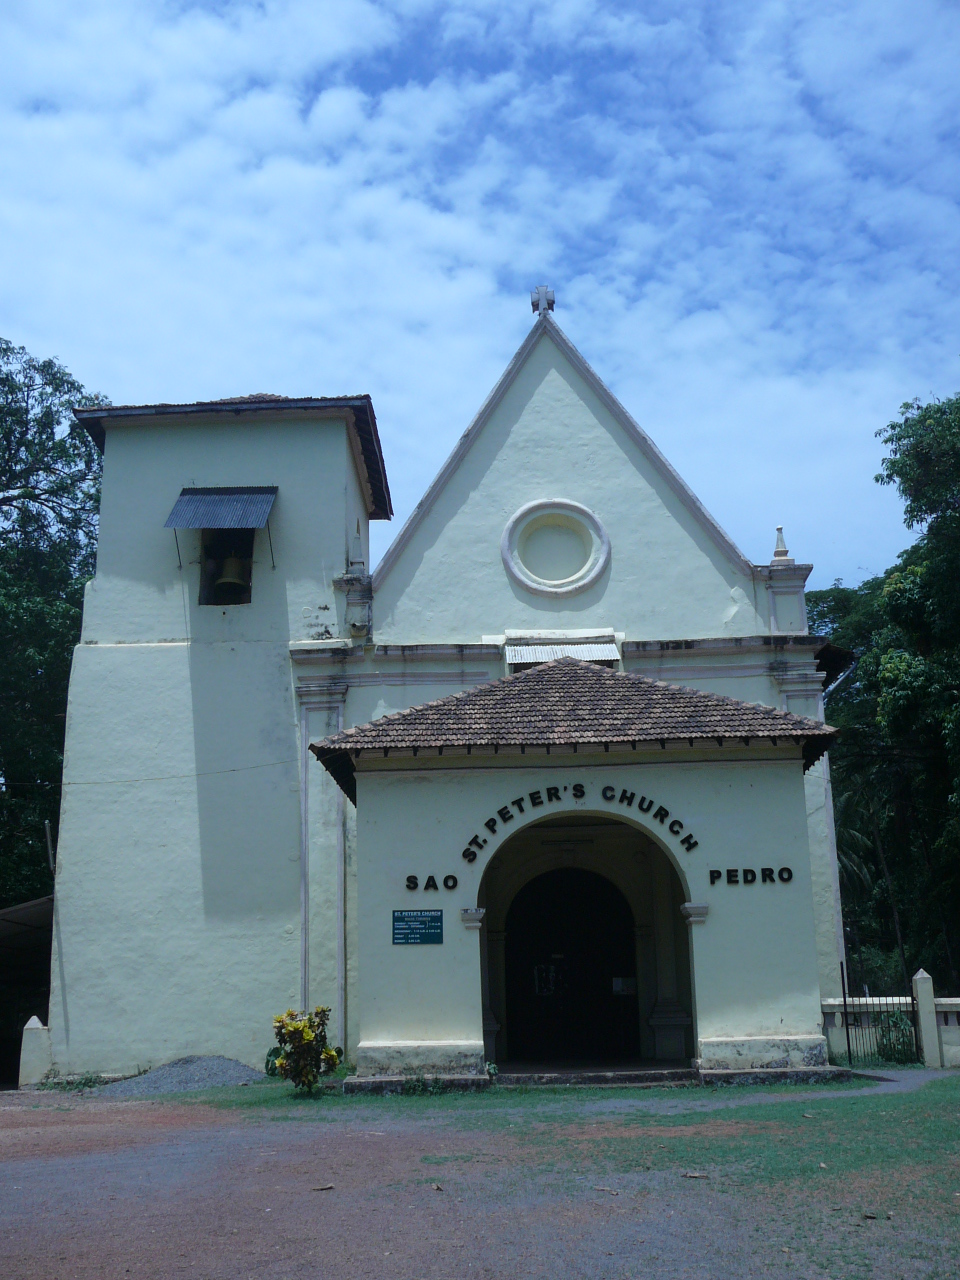 St. Peter's Church, Bainguinim, Goa